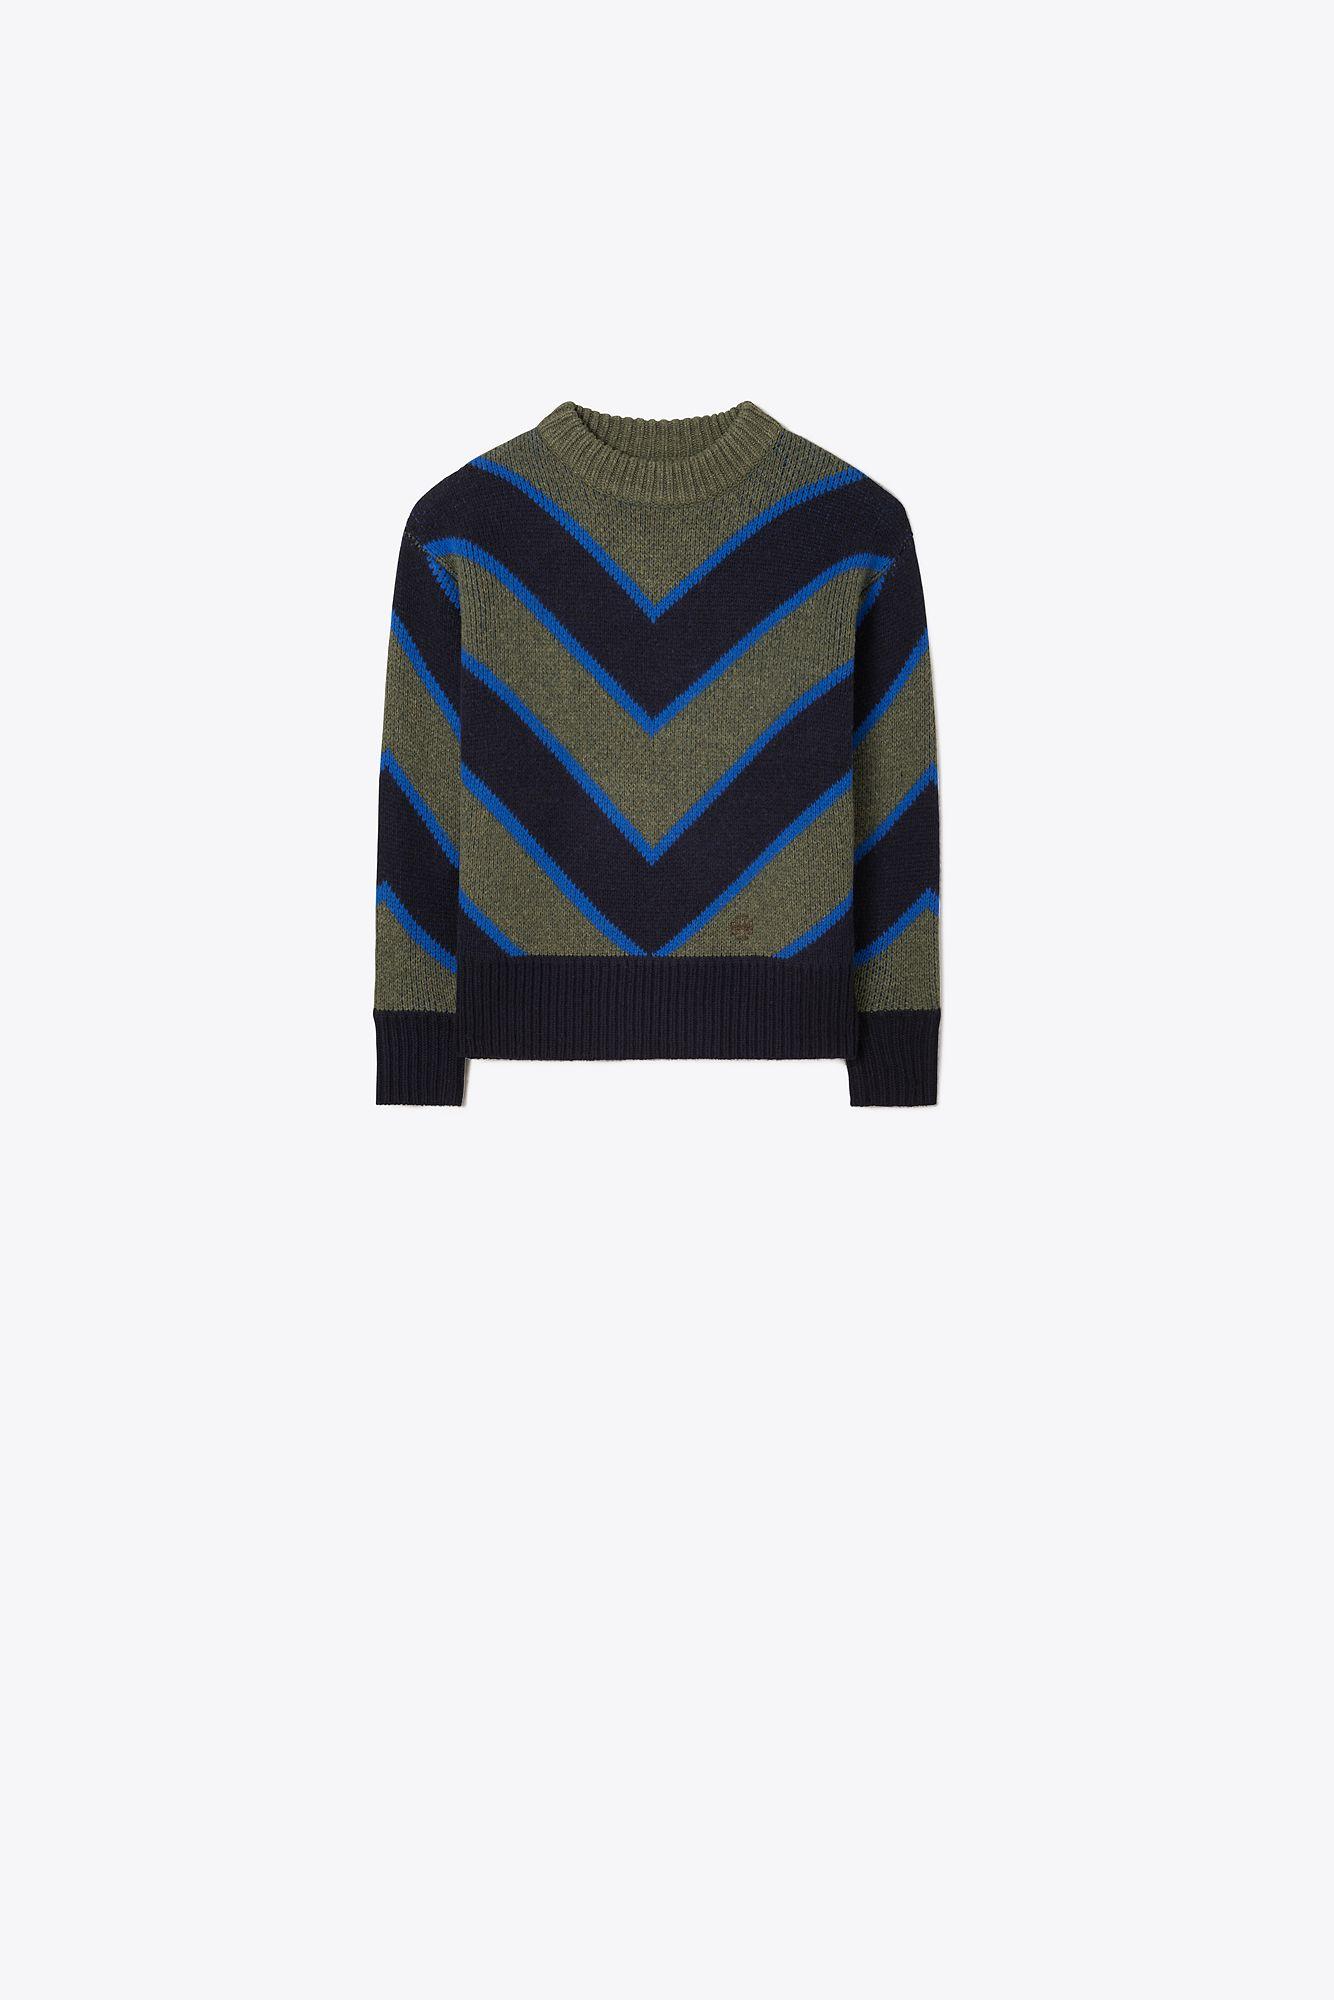 Tory Burch Colorblock Chevron Sweater in Blue | Lyst